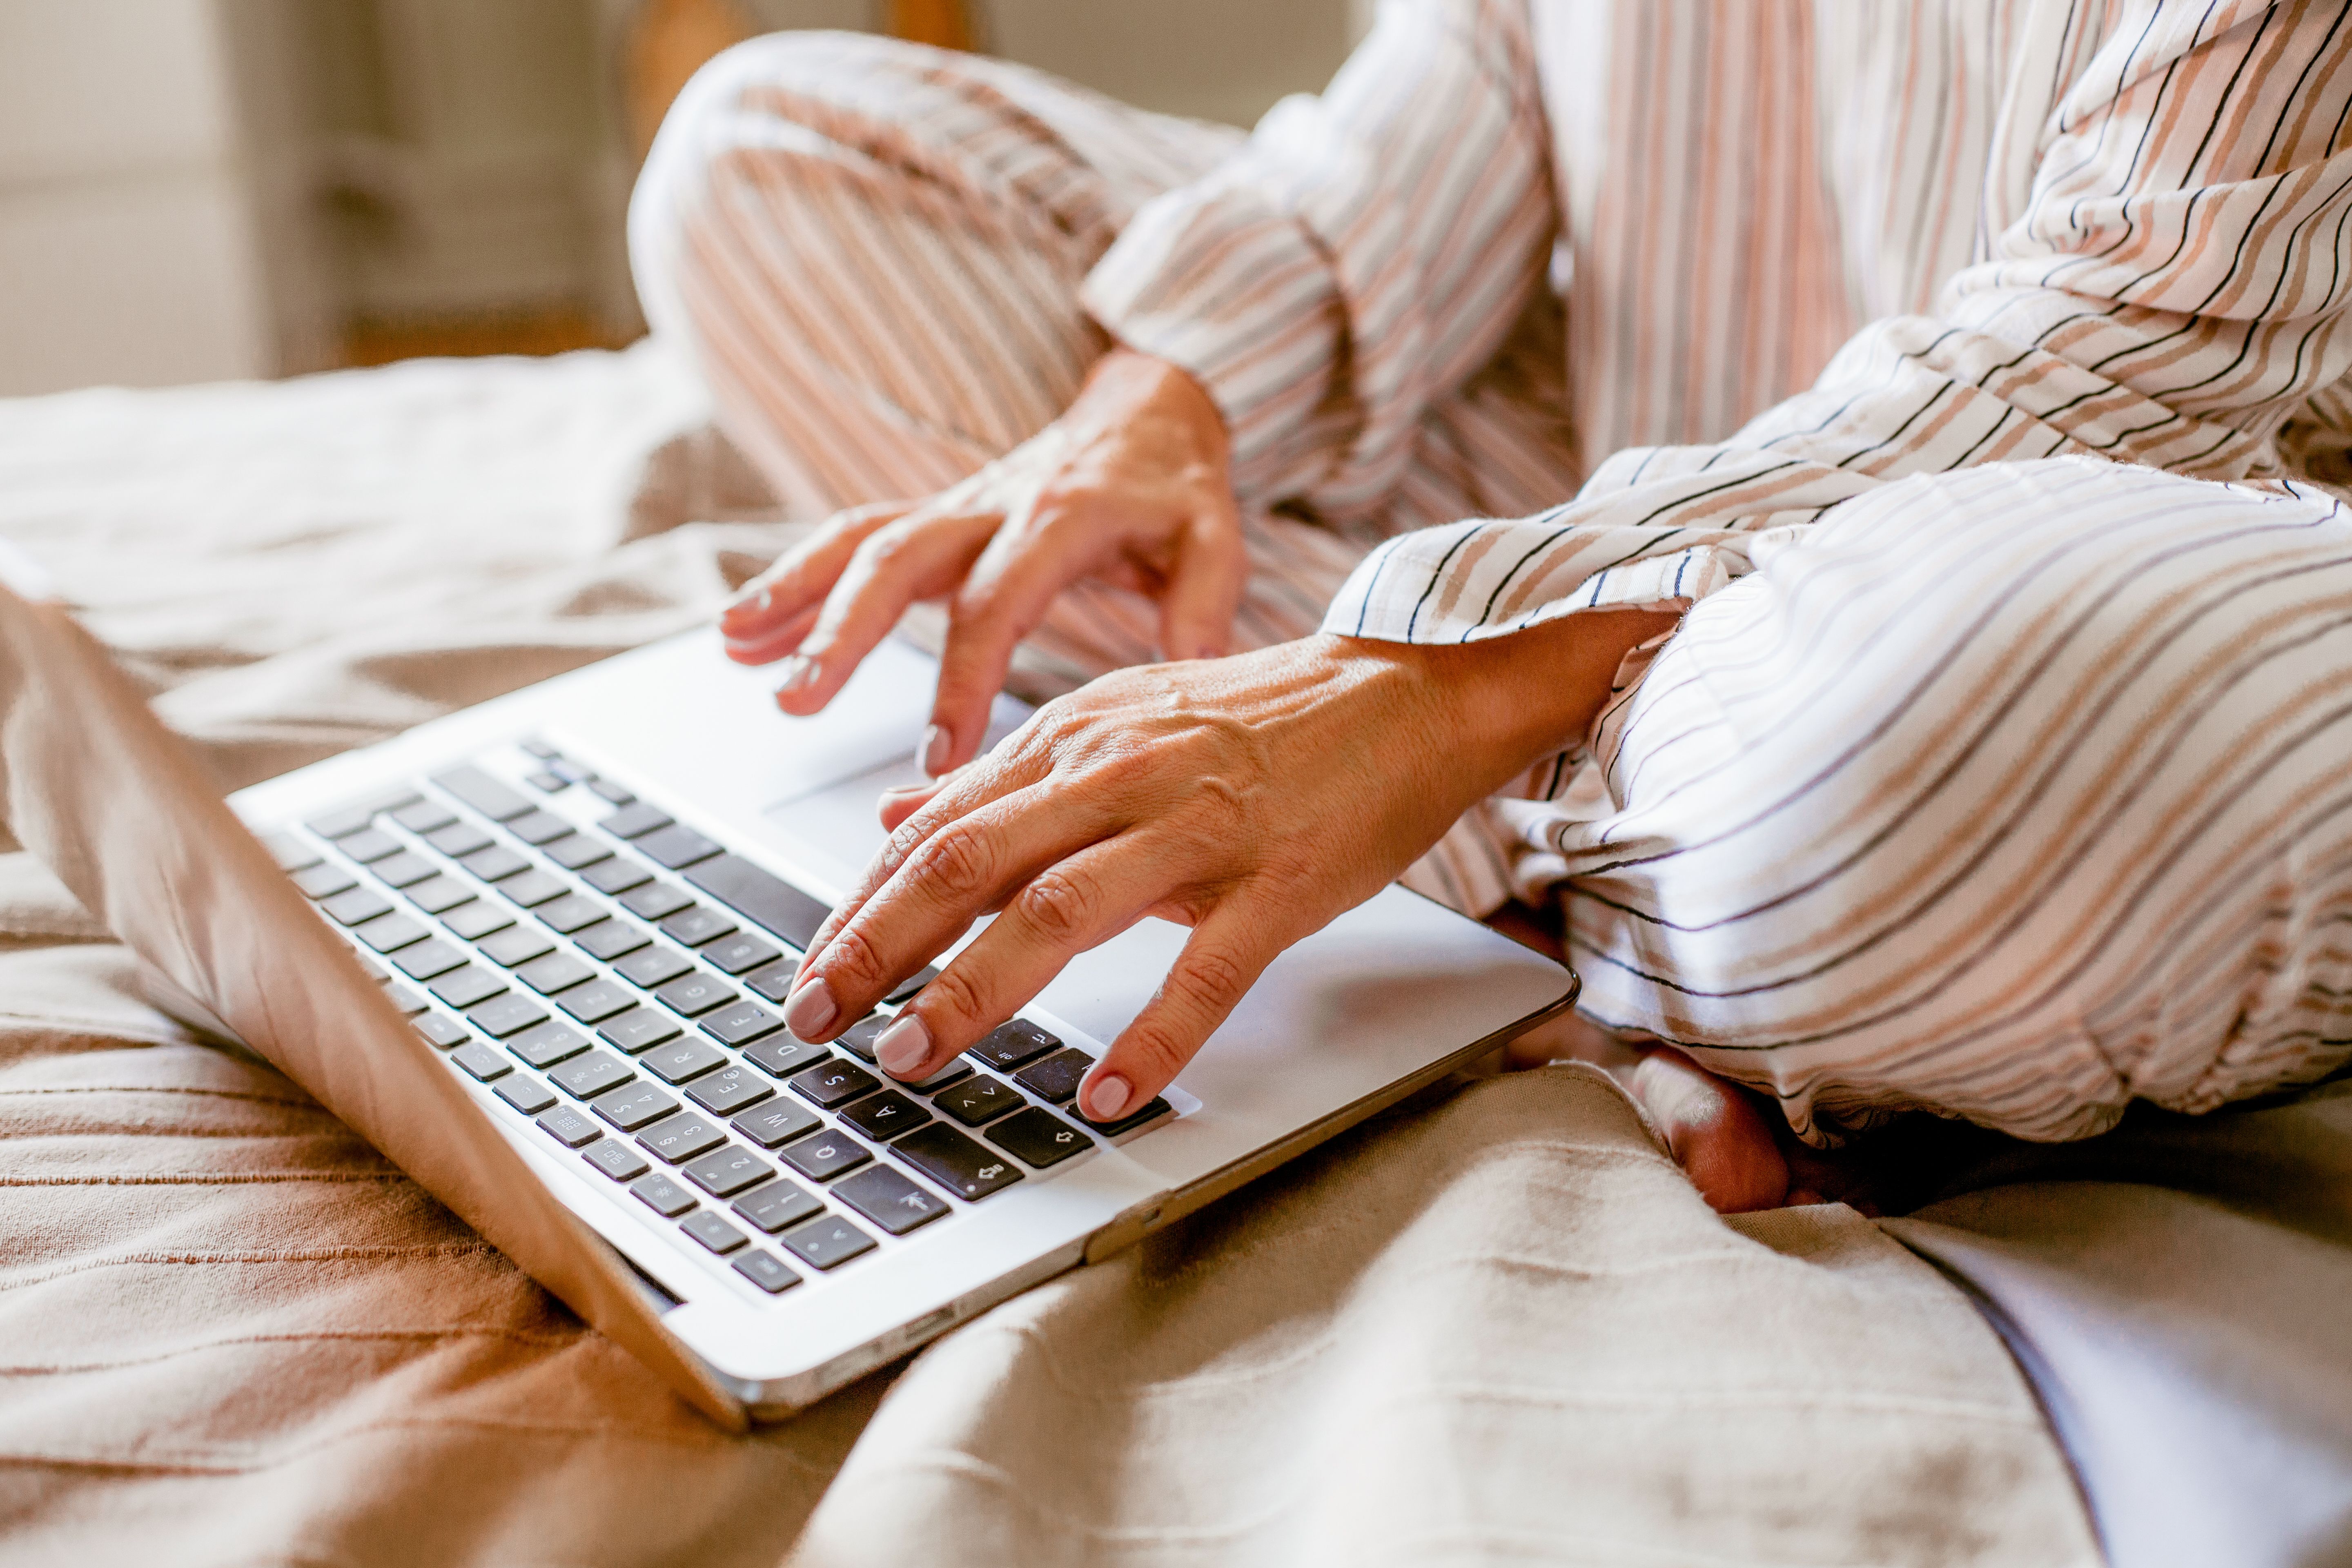 Elderly woman sitting on bed in pyjamas, typing on laptop 